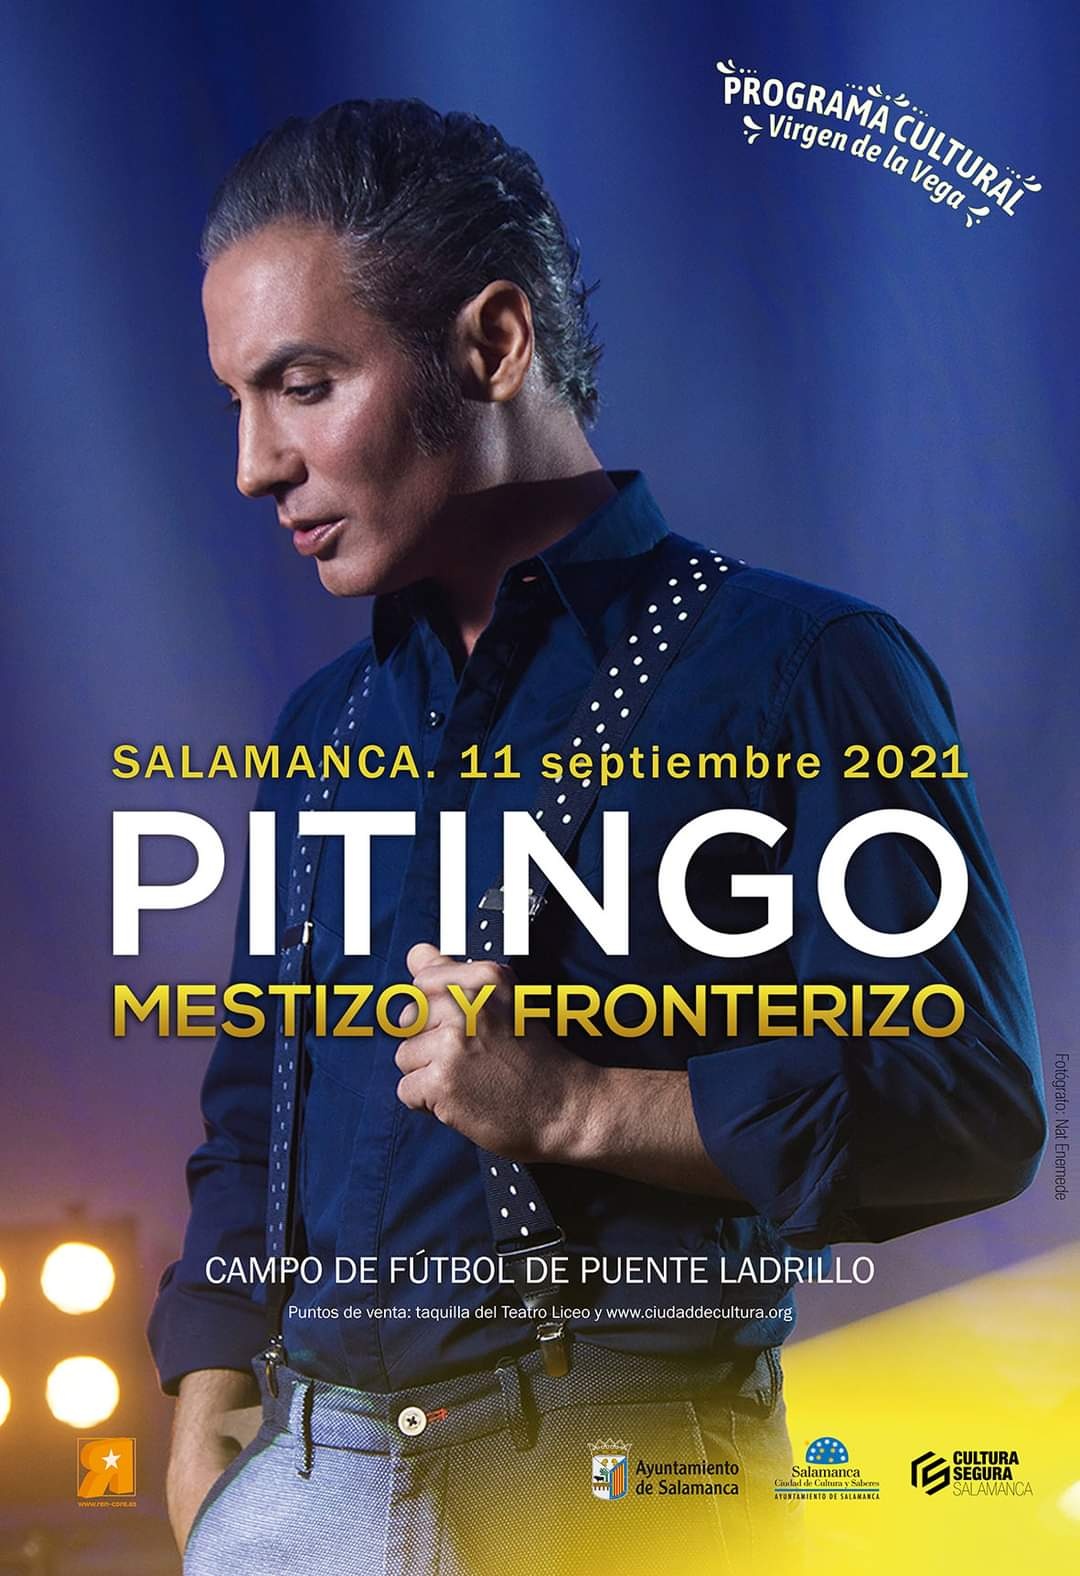 PITINGO - Gira Mestizo y Fronterizo